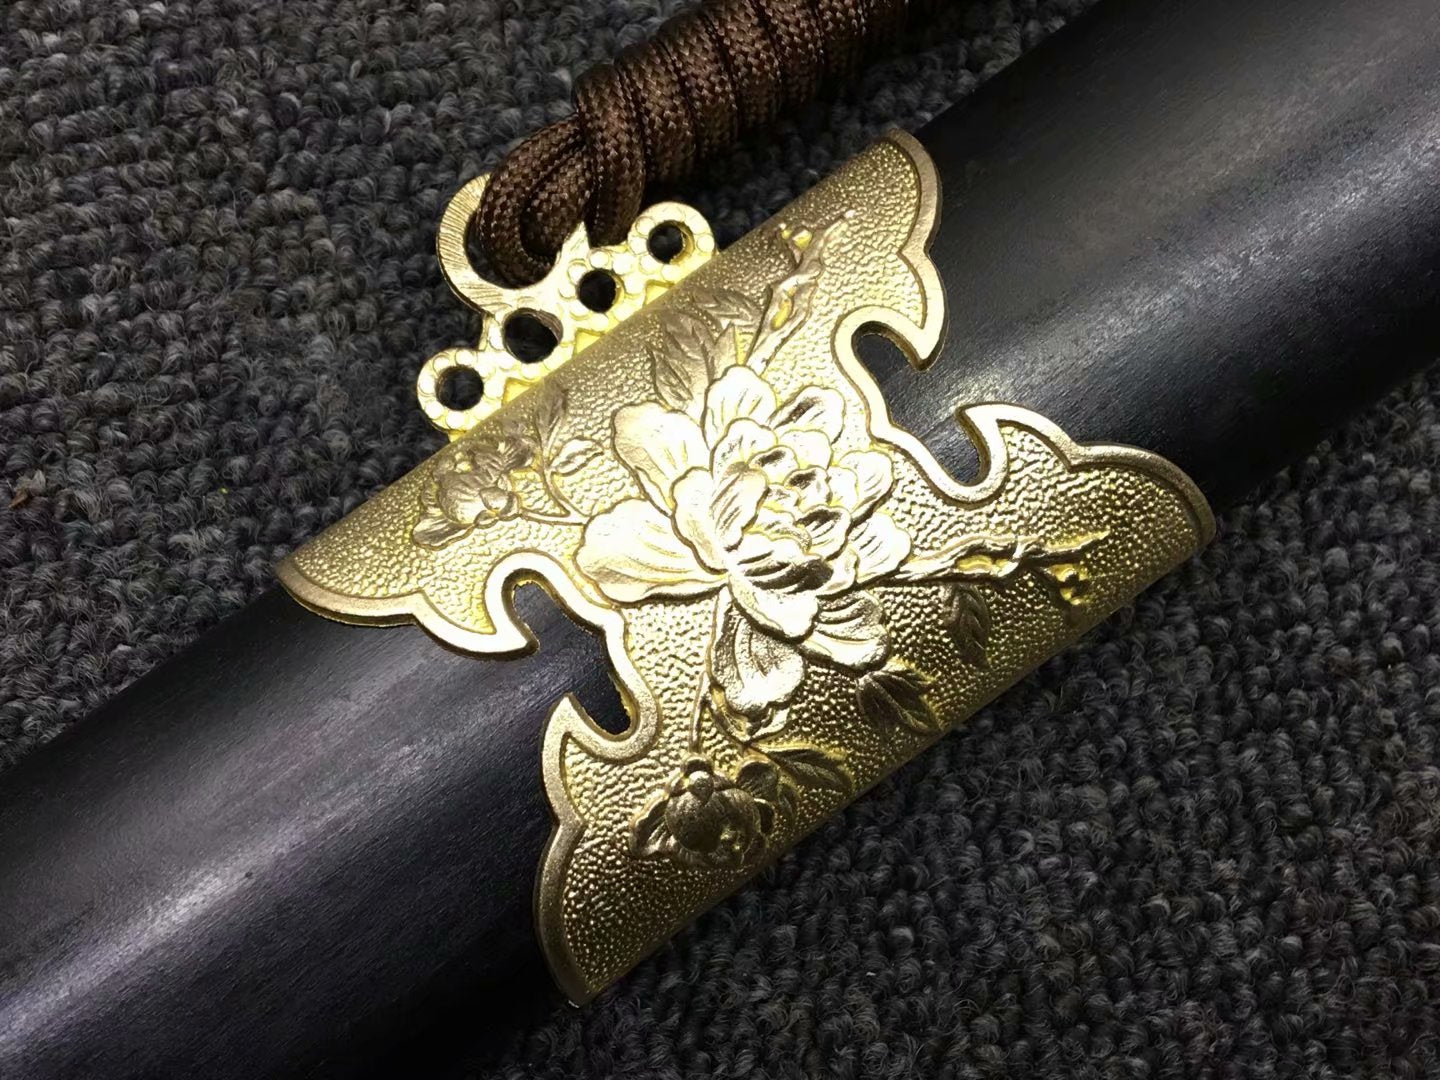 Peony sword,Handmade Damascus steel blade,Brass,Black wood,Full tang - Chinese sword shop